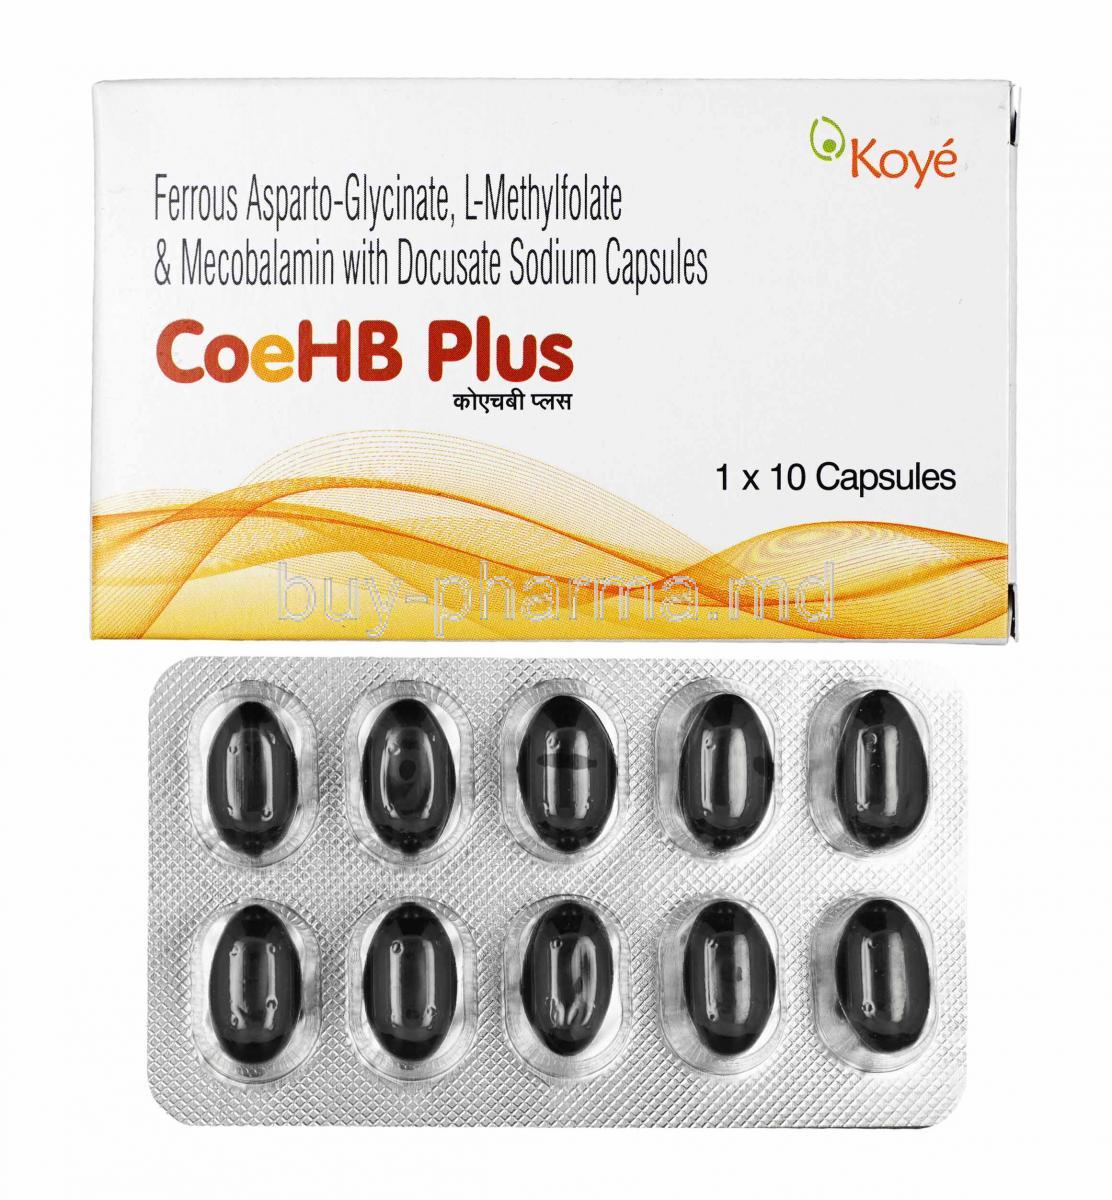 CoeHB Plus box and capsules